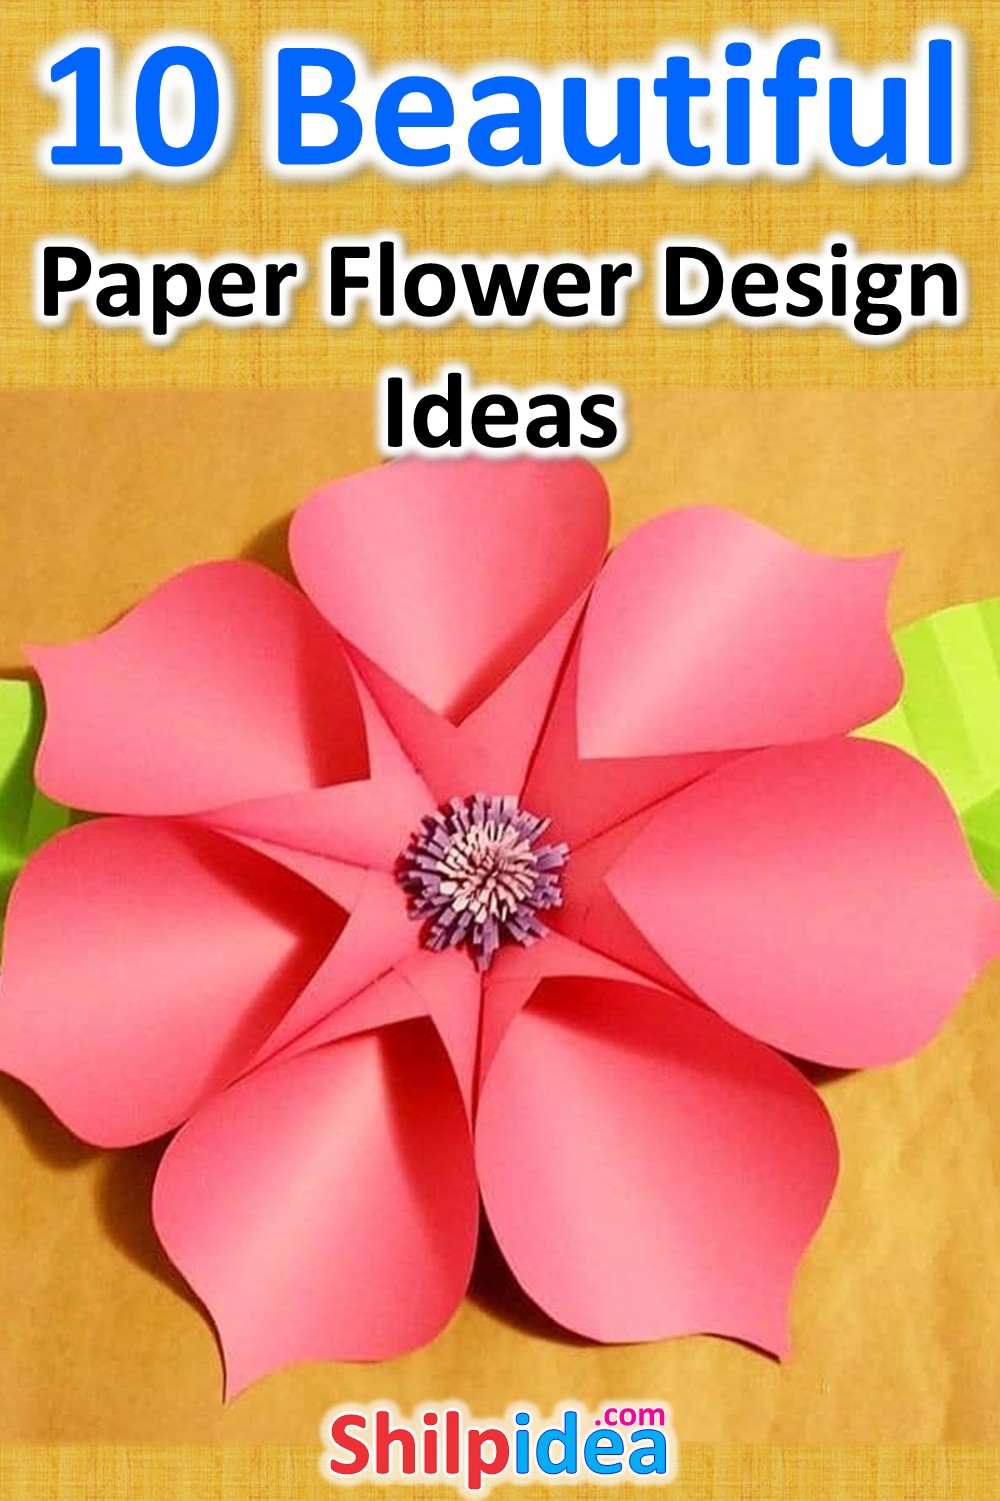 paper-flower-design-ideas-shilpidea-pin